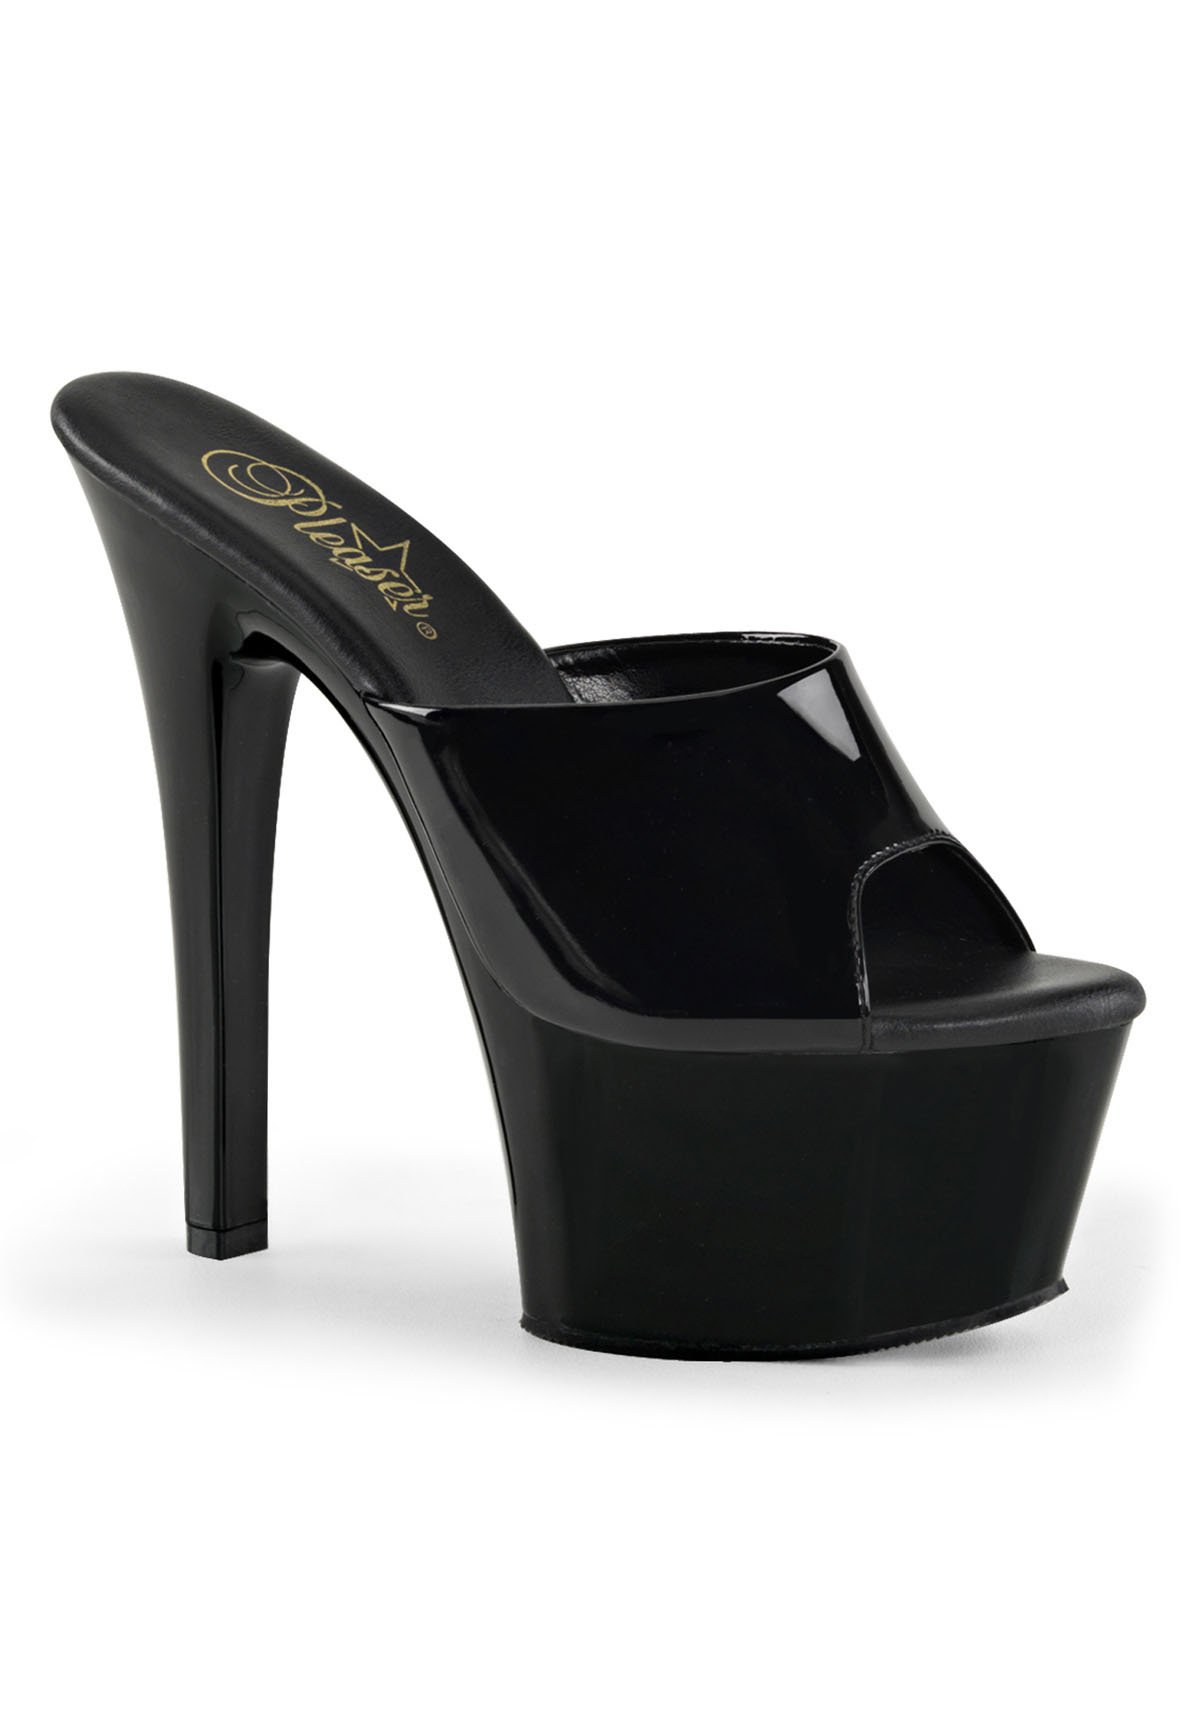 Womens Peep Toe Heels Clear Pumps Rhinestones Transparent 4 1/2 Inch Heels  Shoe Size: 7 - Summitfashions pumps for wome… | Rhinestone high heels, Heels,  Shoes heels